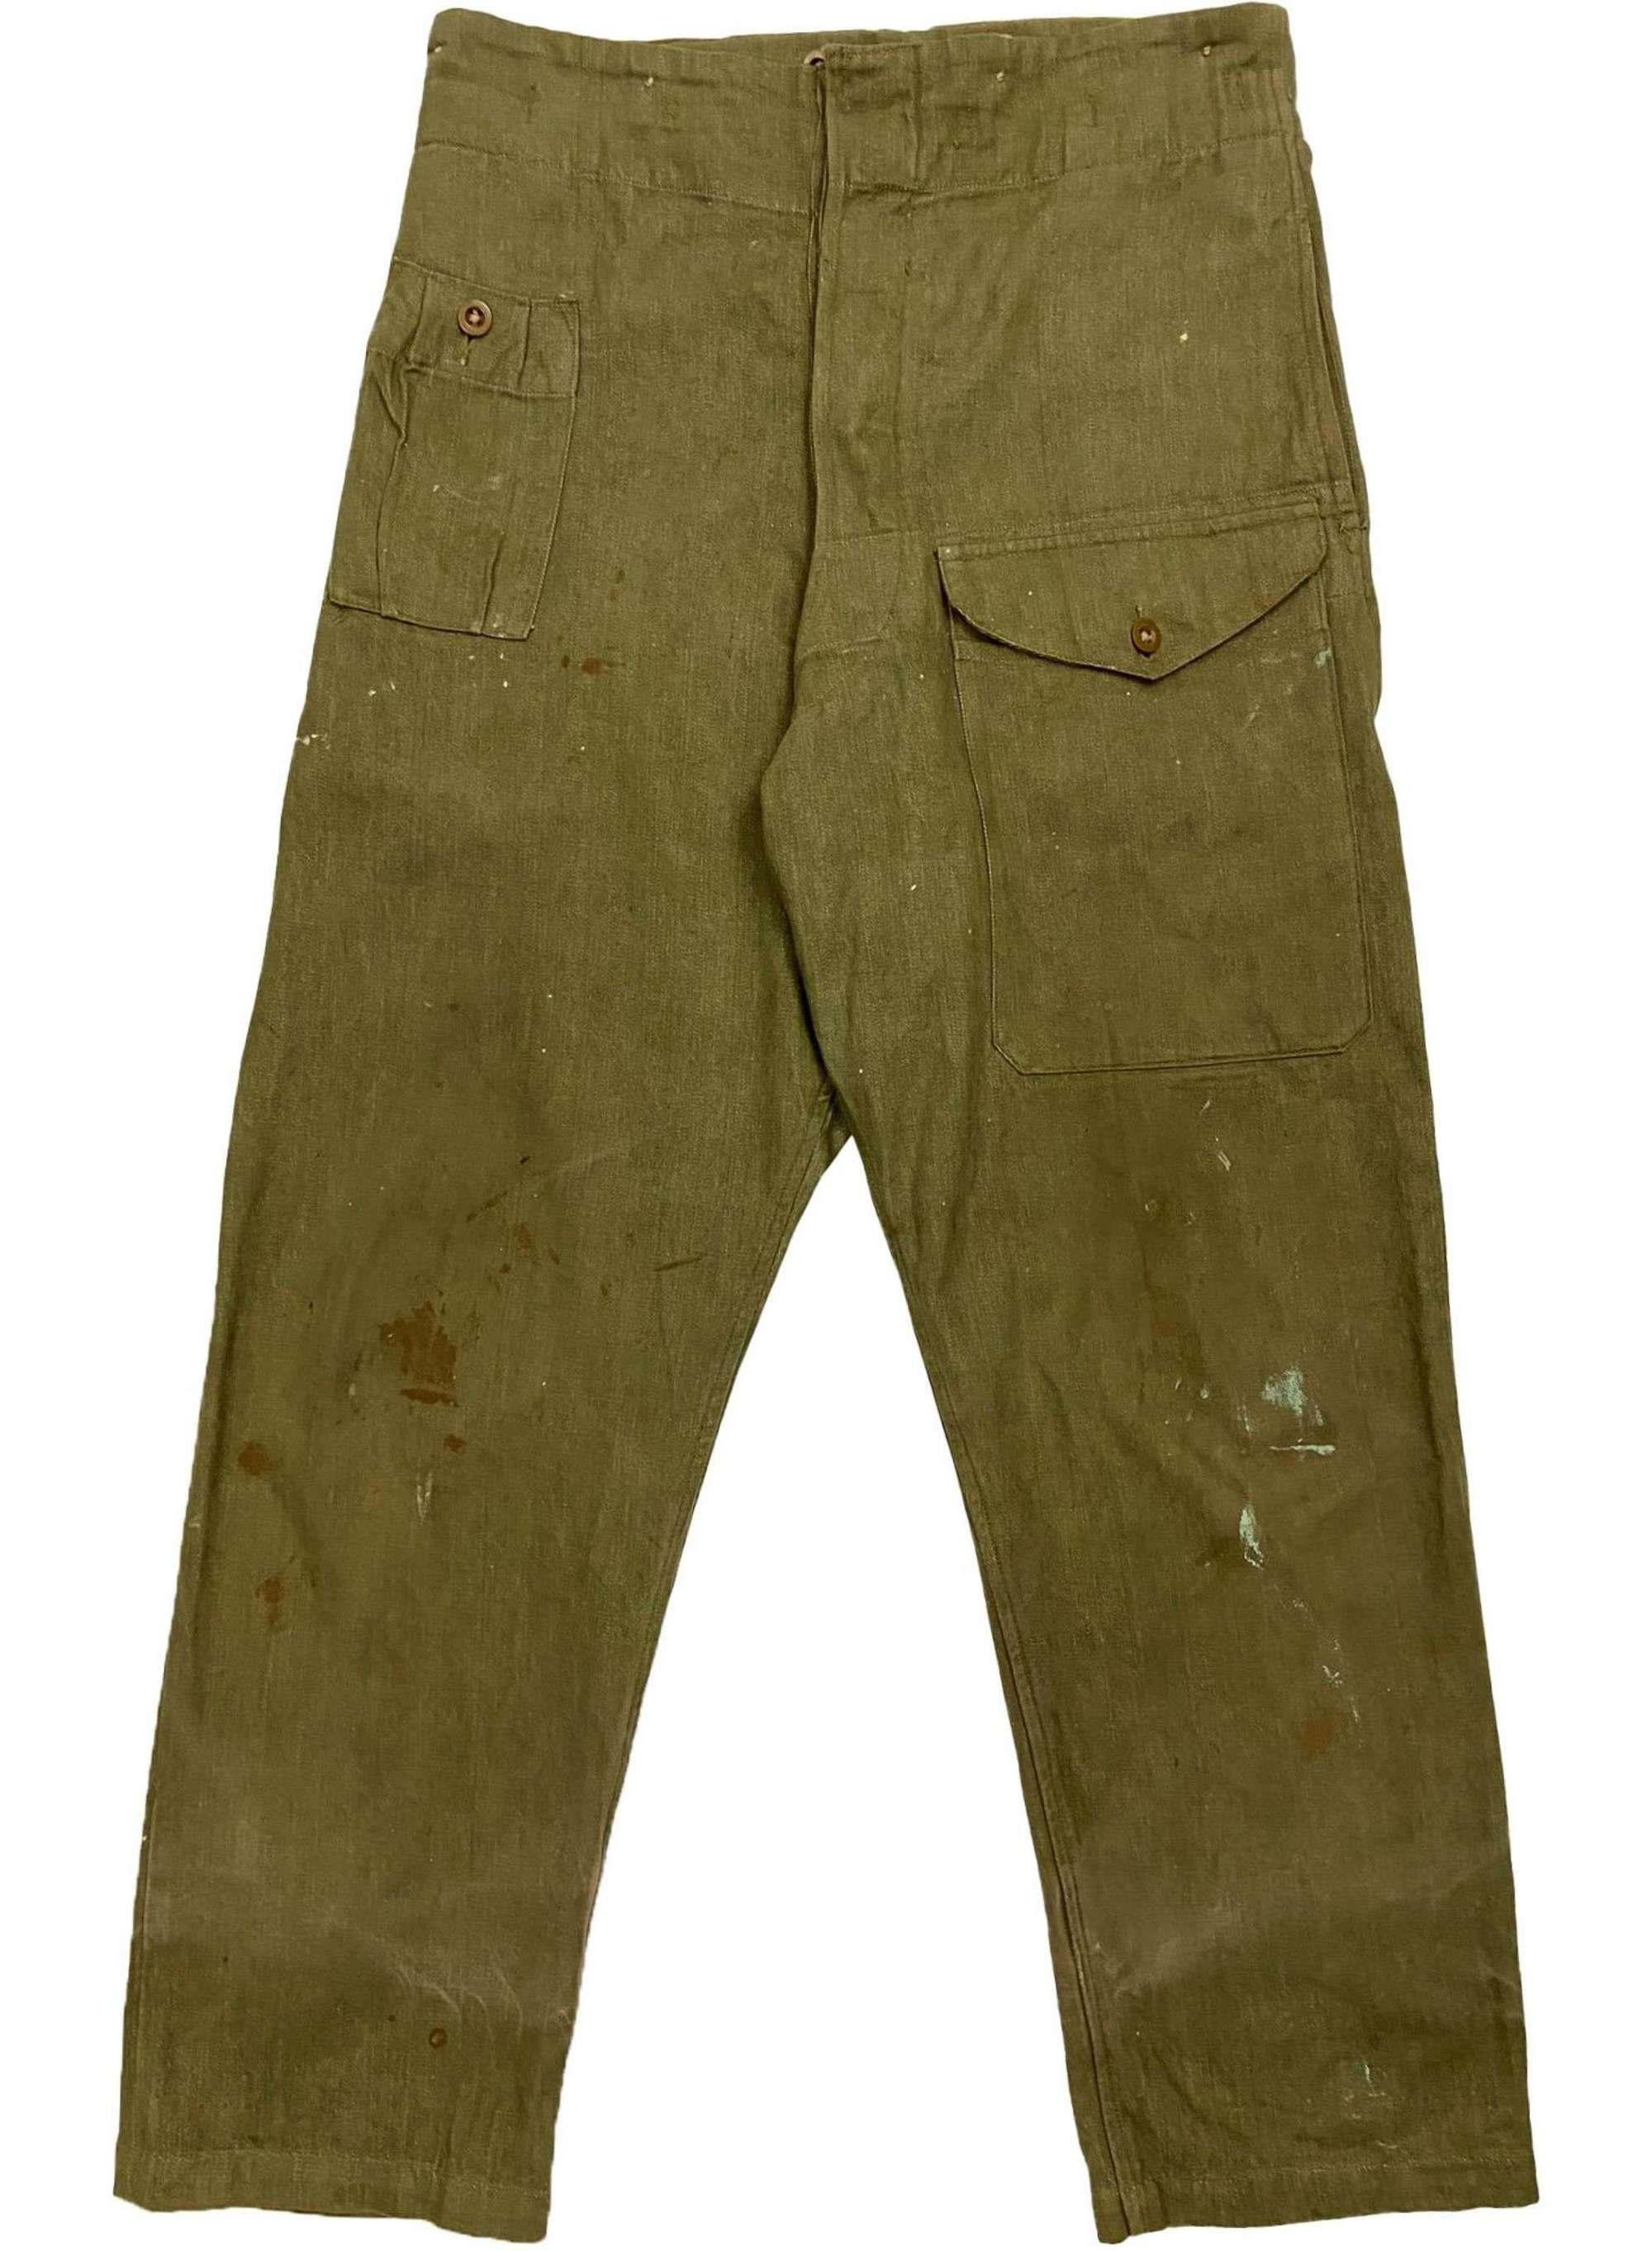 Original 1954 Dated British Army Denim Battledress Trousers - Size 6